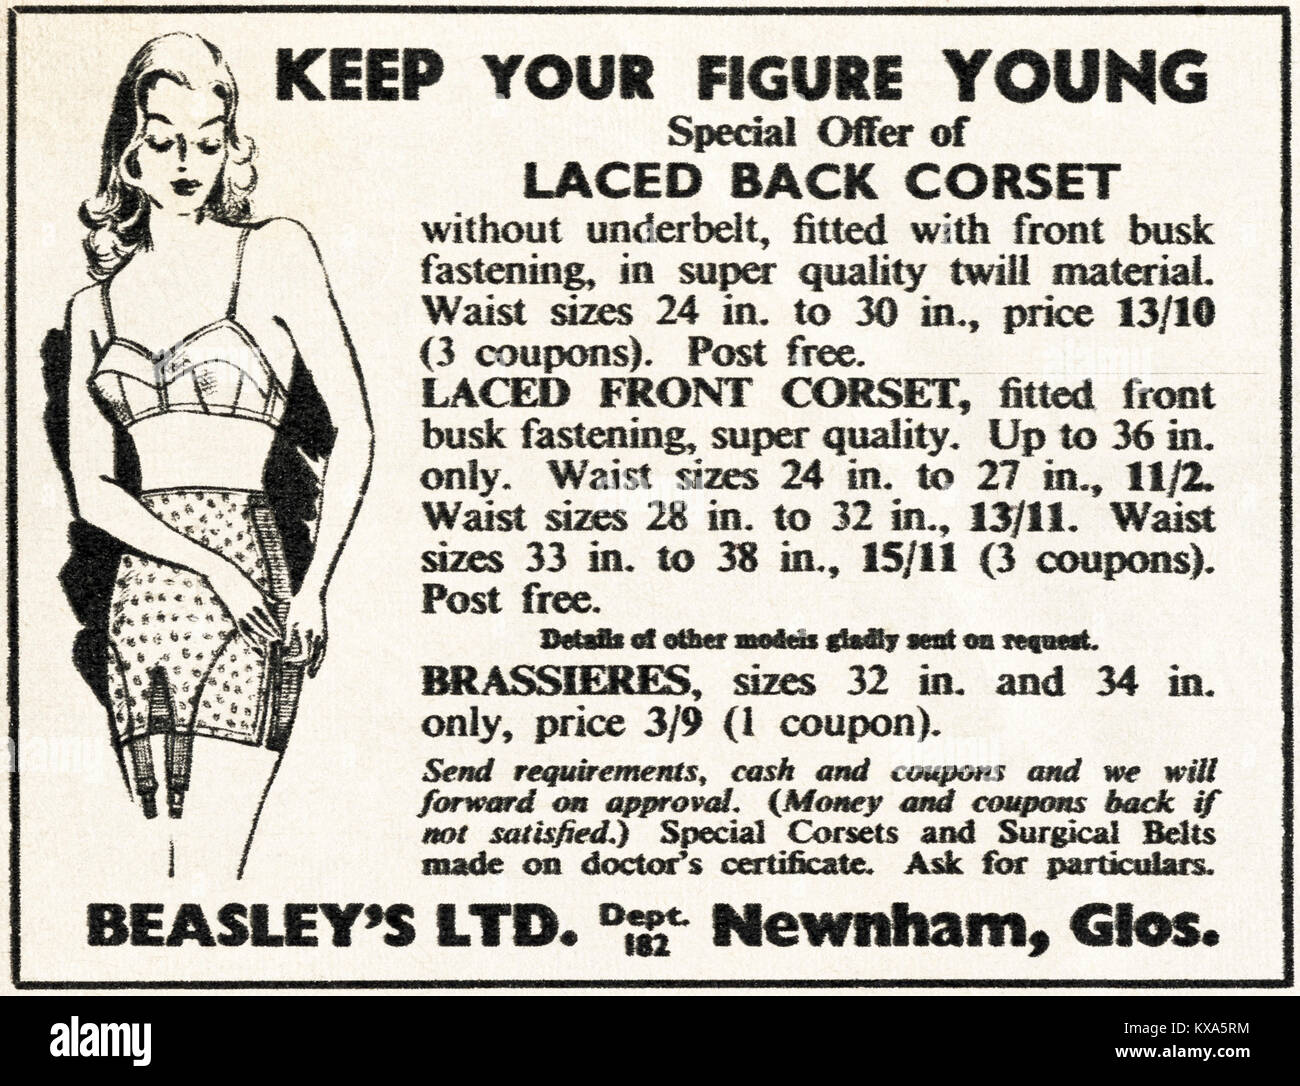 1940s old vintage original advert advertising corsets by Beasley's Ltd of Newnham Gloucestershire England UK in magazine circa 1947 when supplies were still restricted under postwar rationing Stock Photo